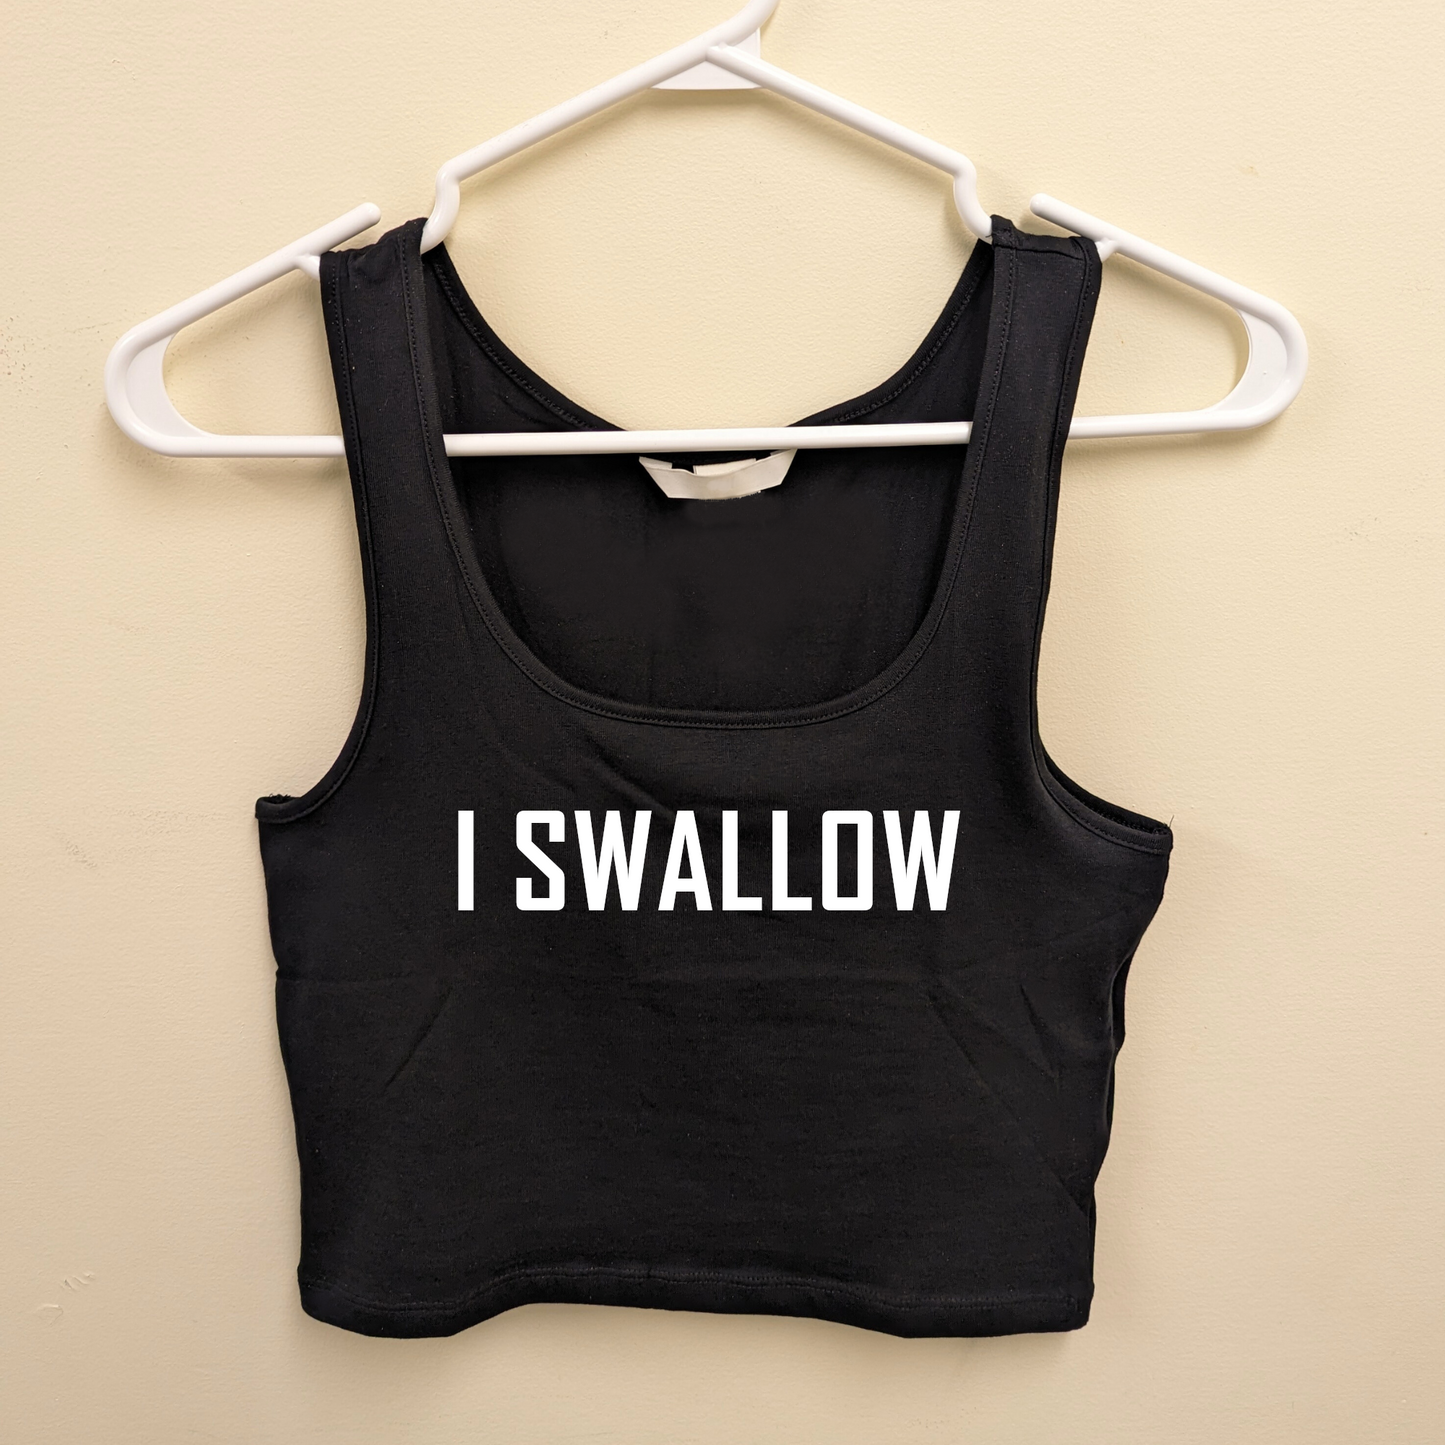 I Swallow Crop Top